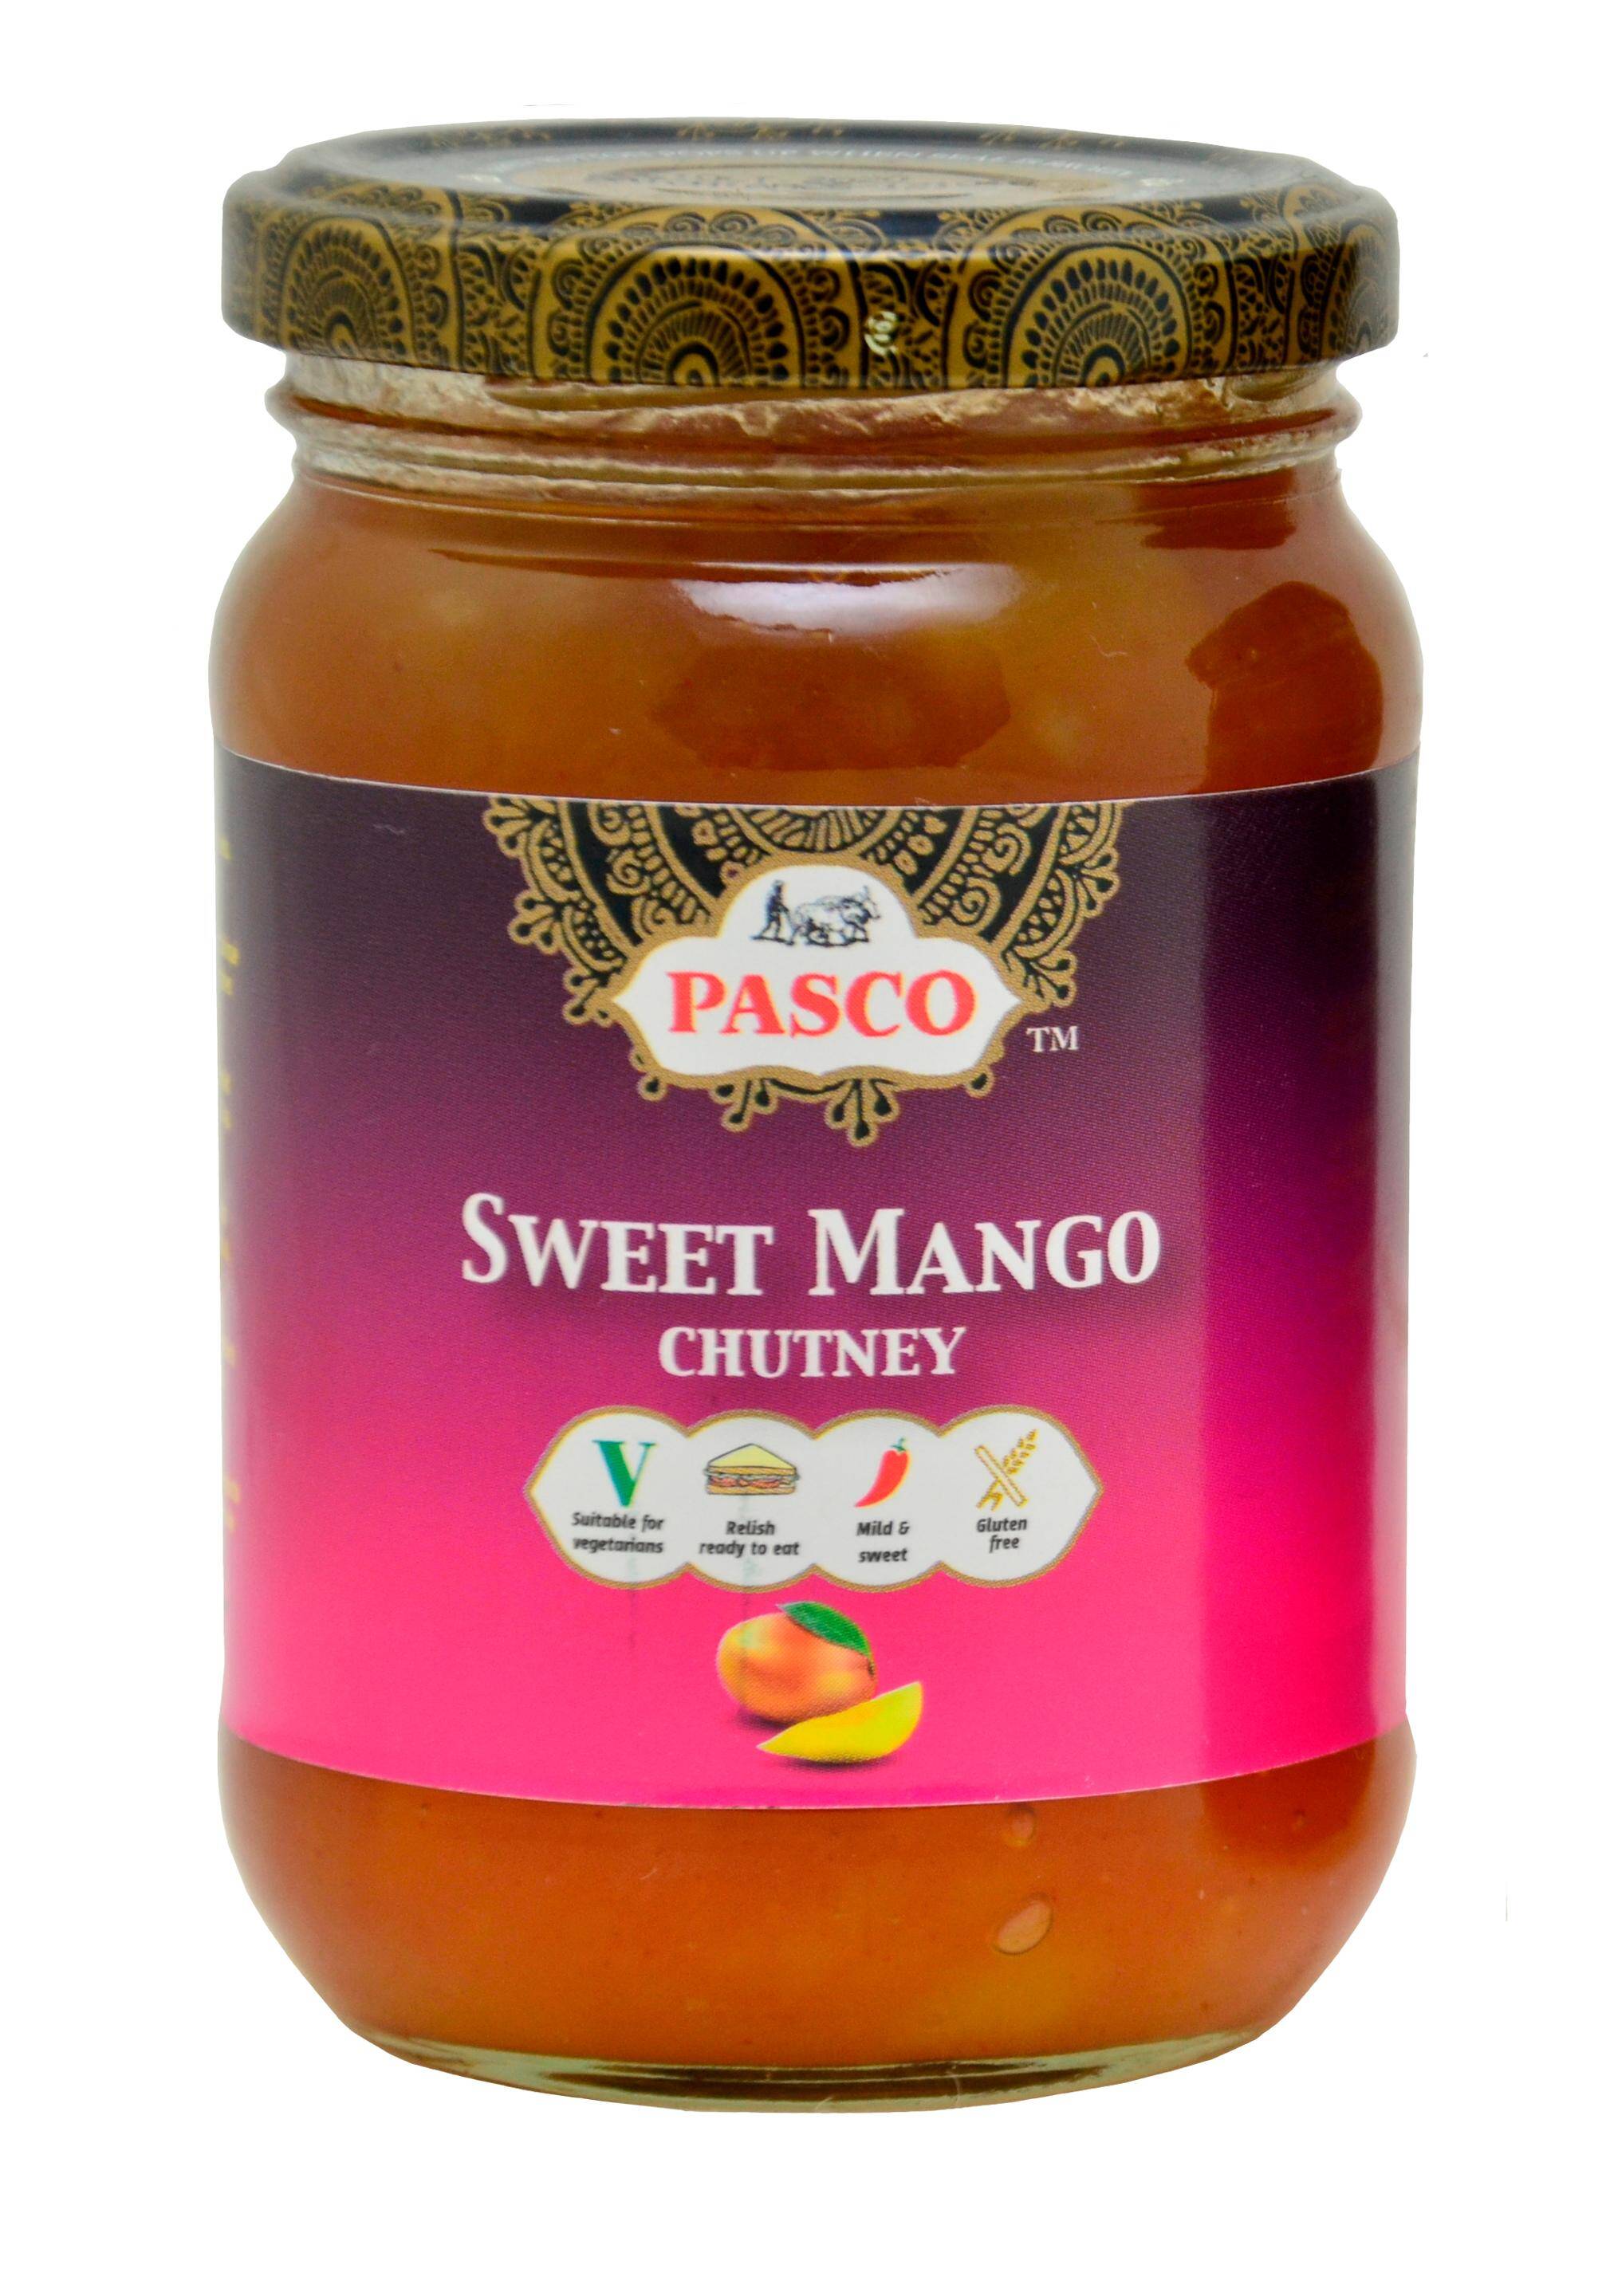 Sweet Mango Chutney 320g/6 Pasco e